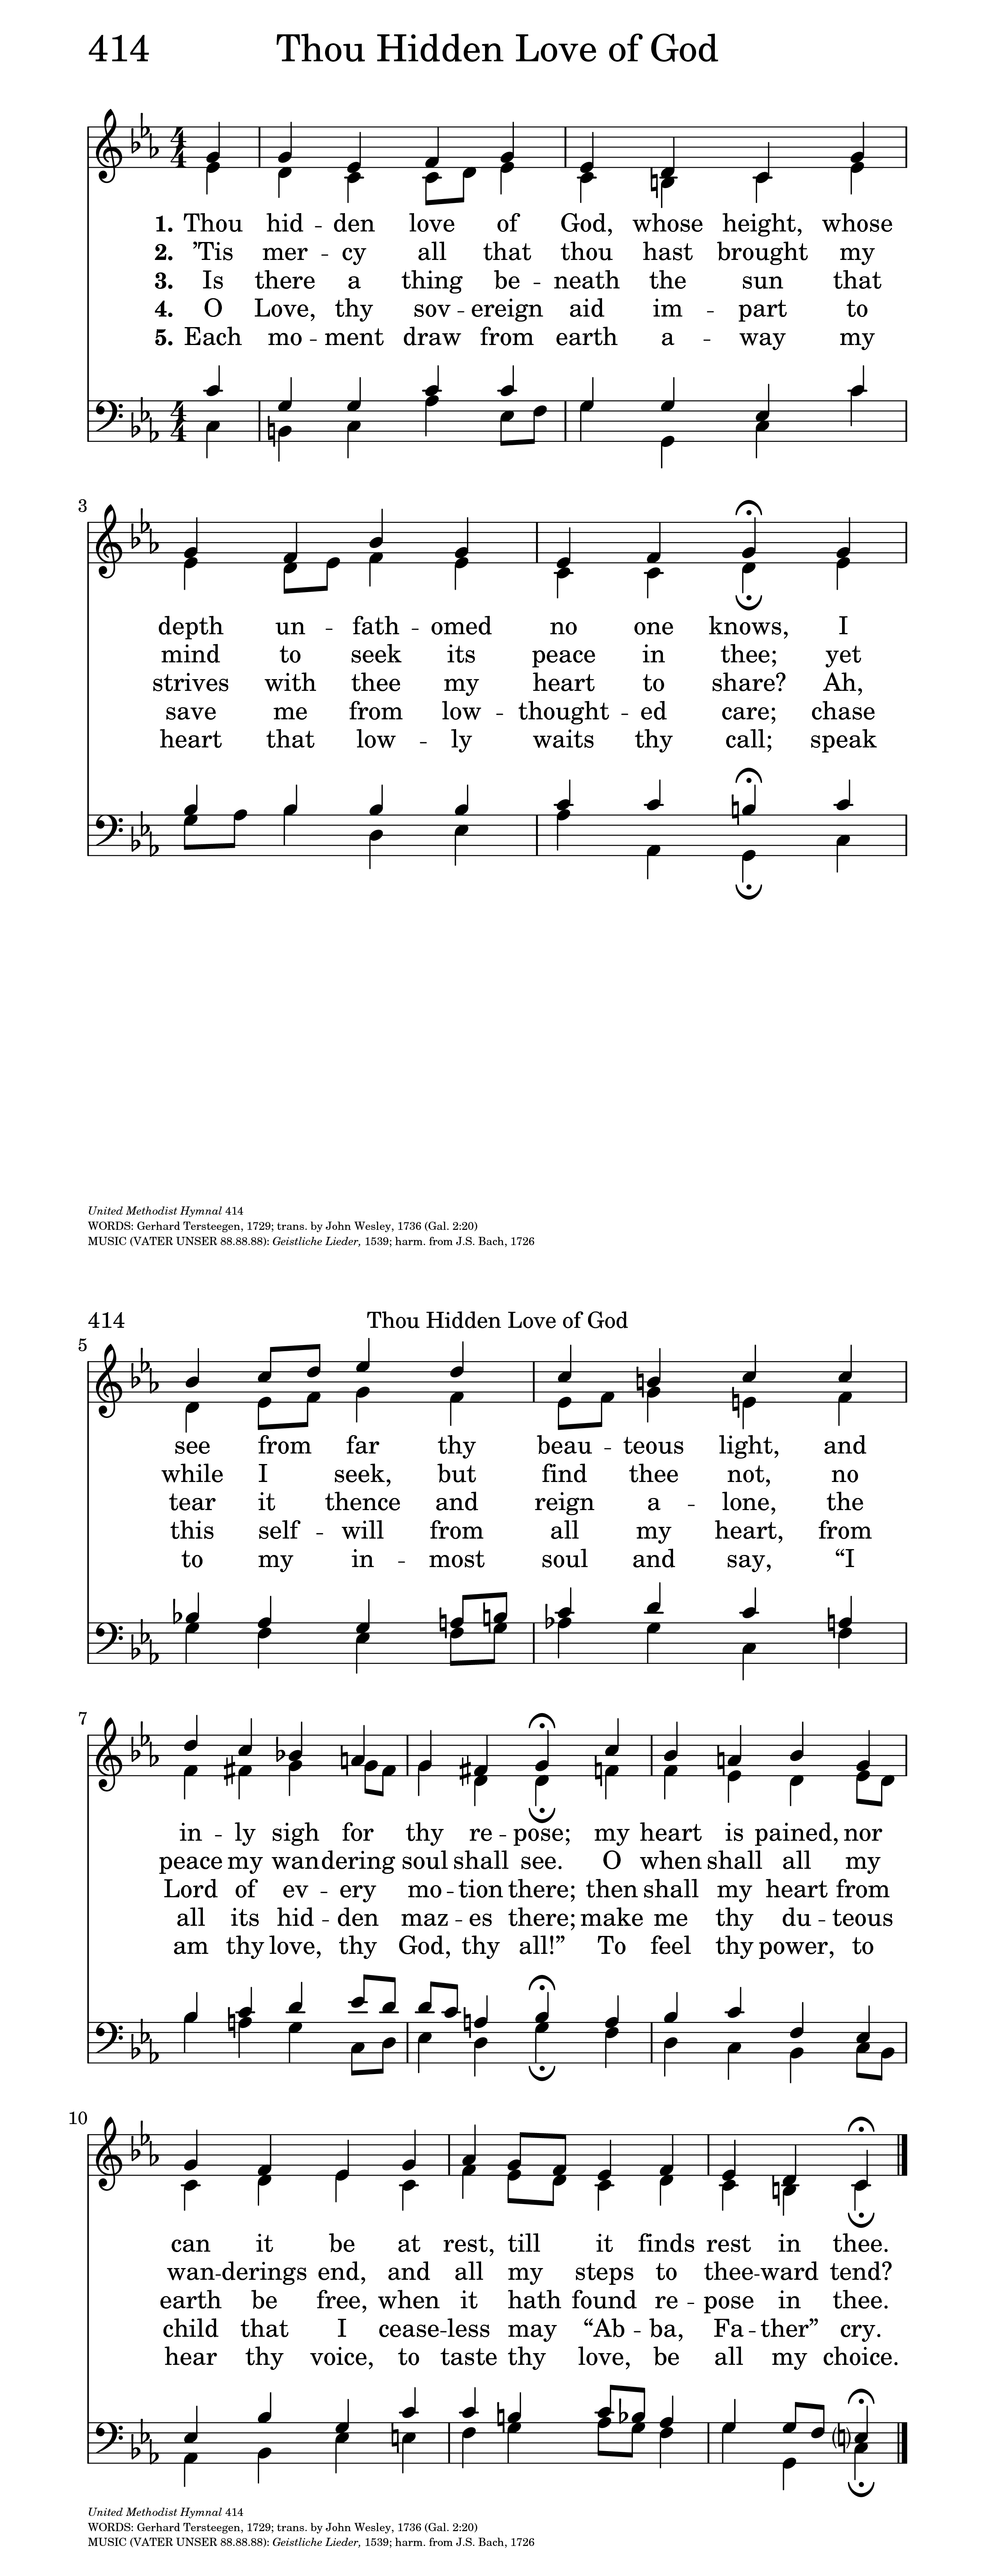 Methodist Hymn-Book 573. Thou hidden love of God, whose height